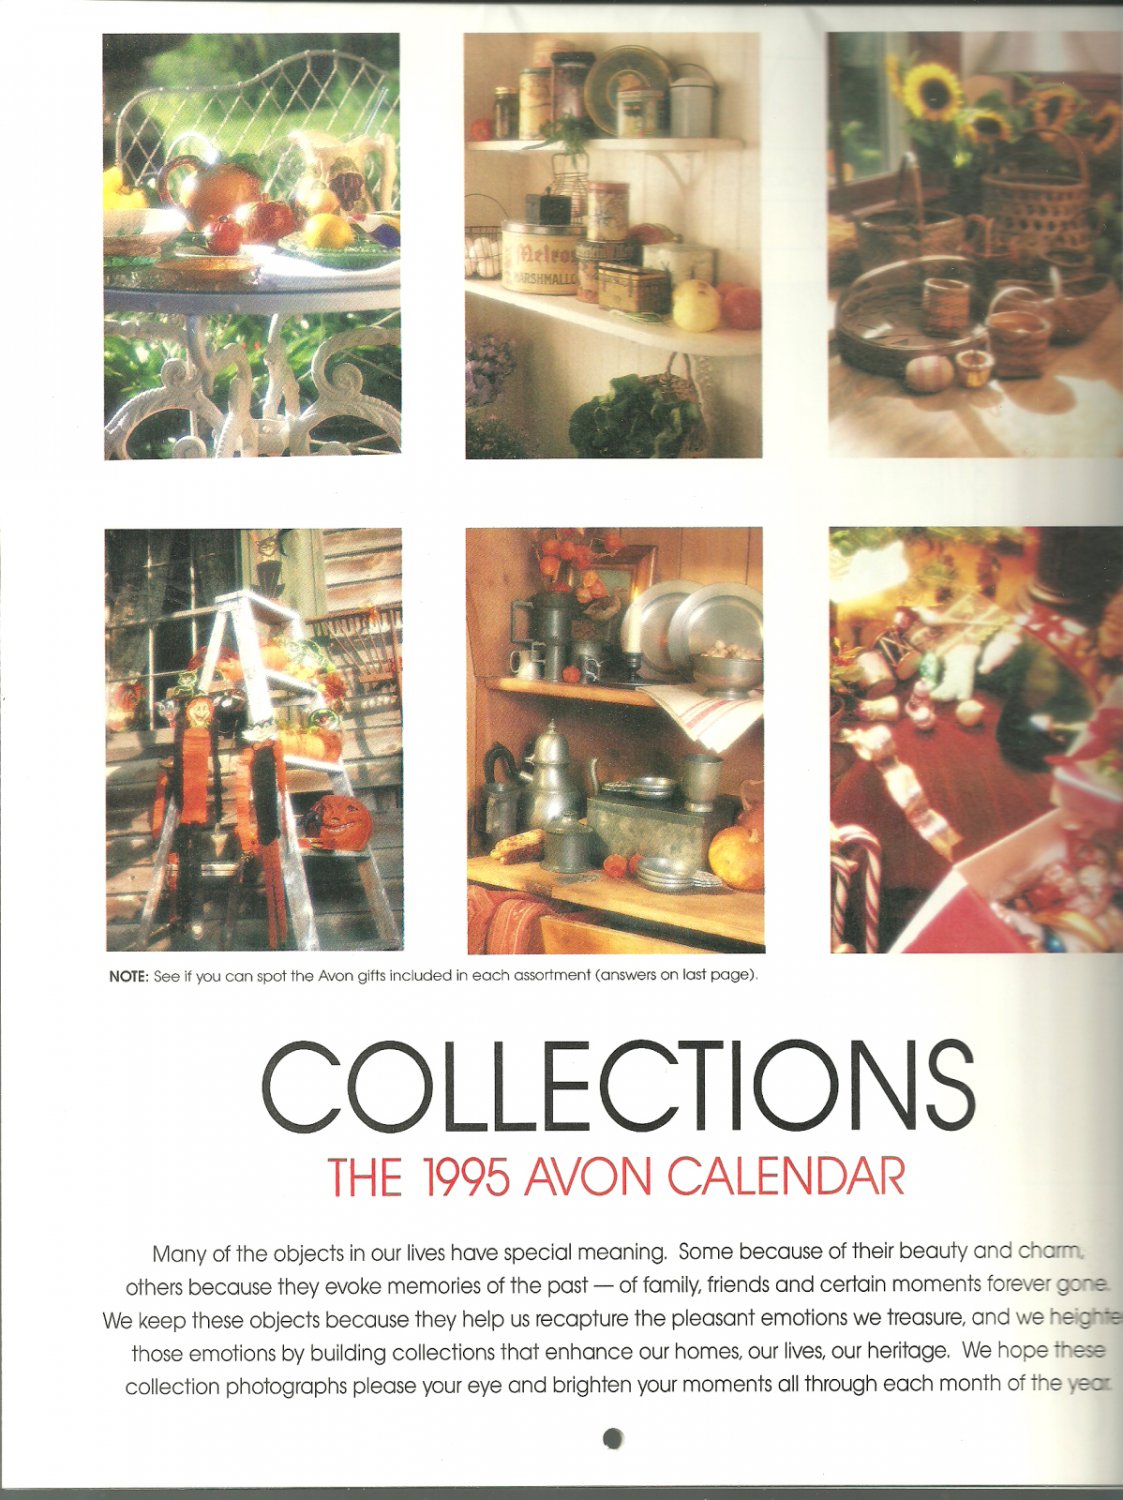 The 1995 Avon Calendar